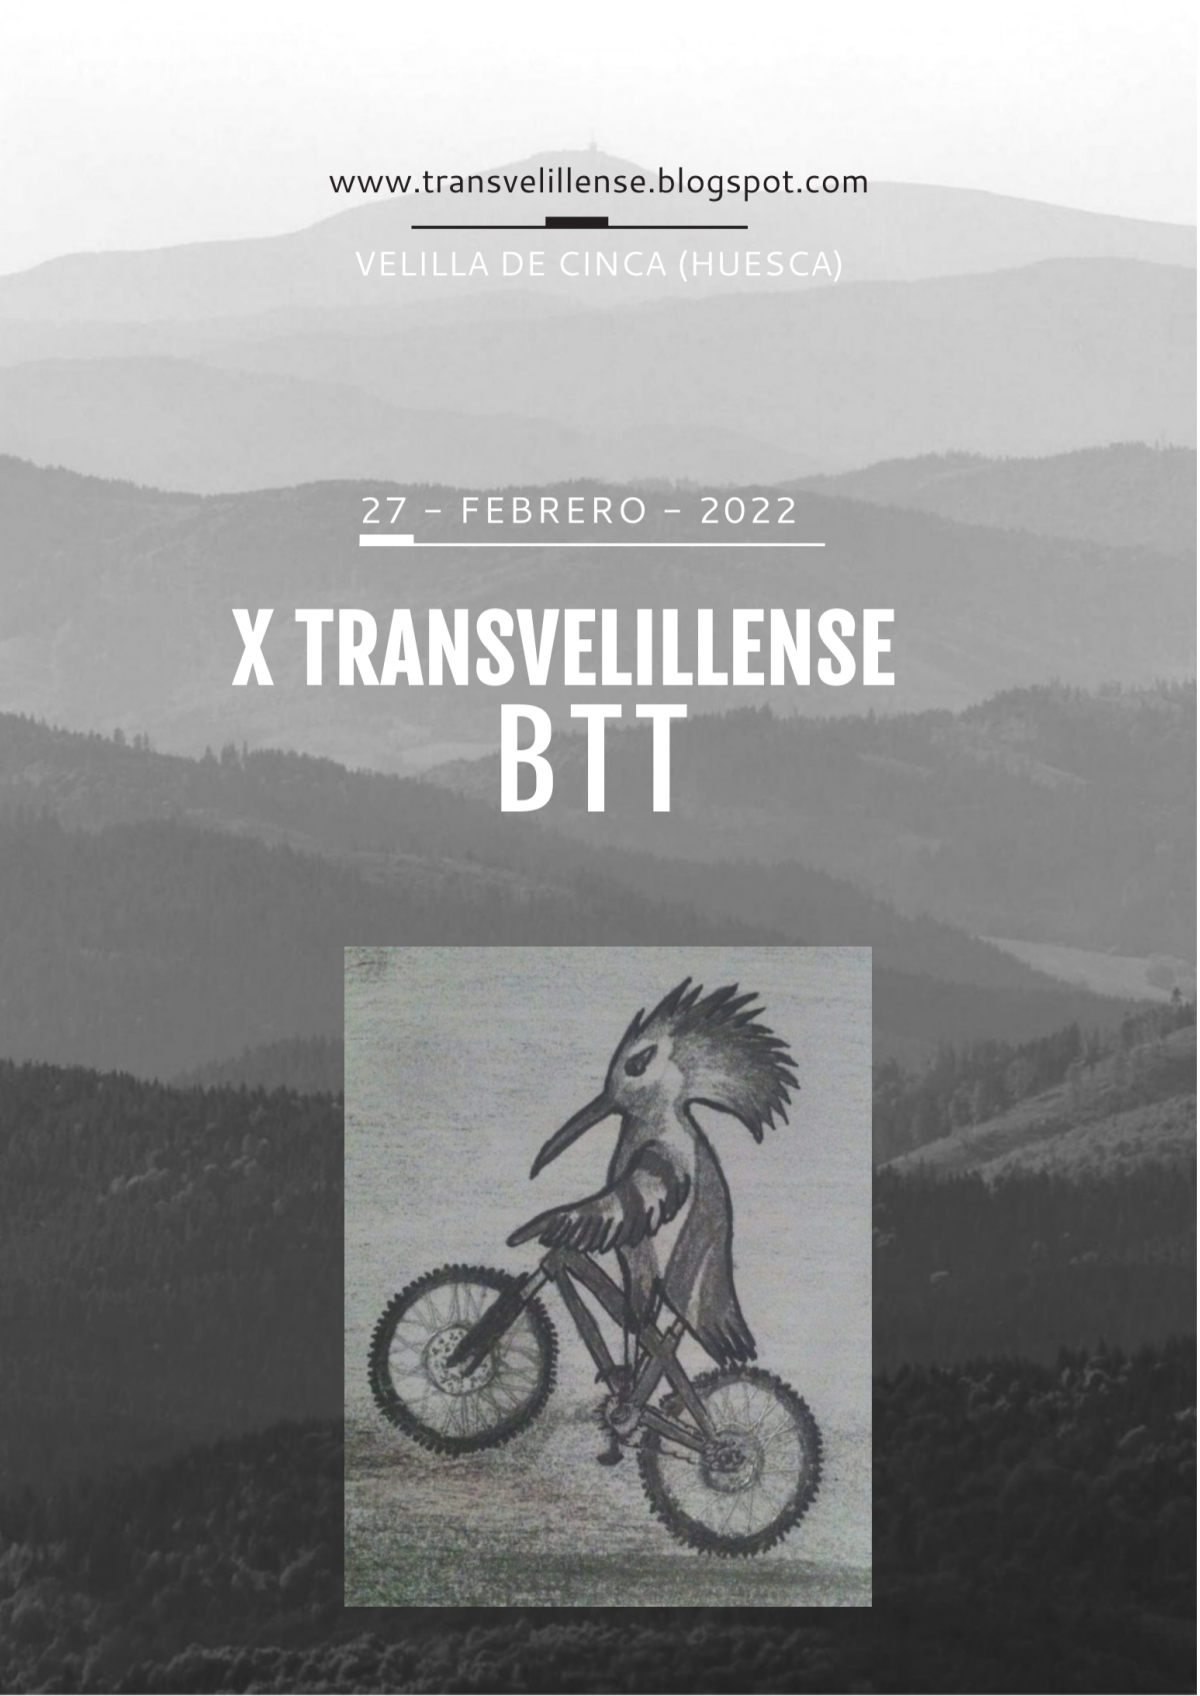 X Transvelillense BTT